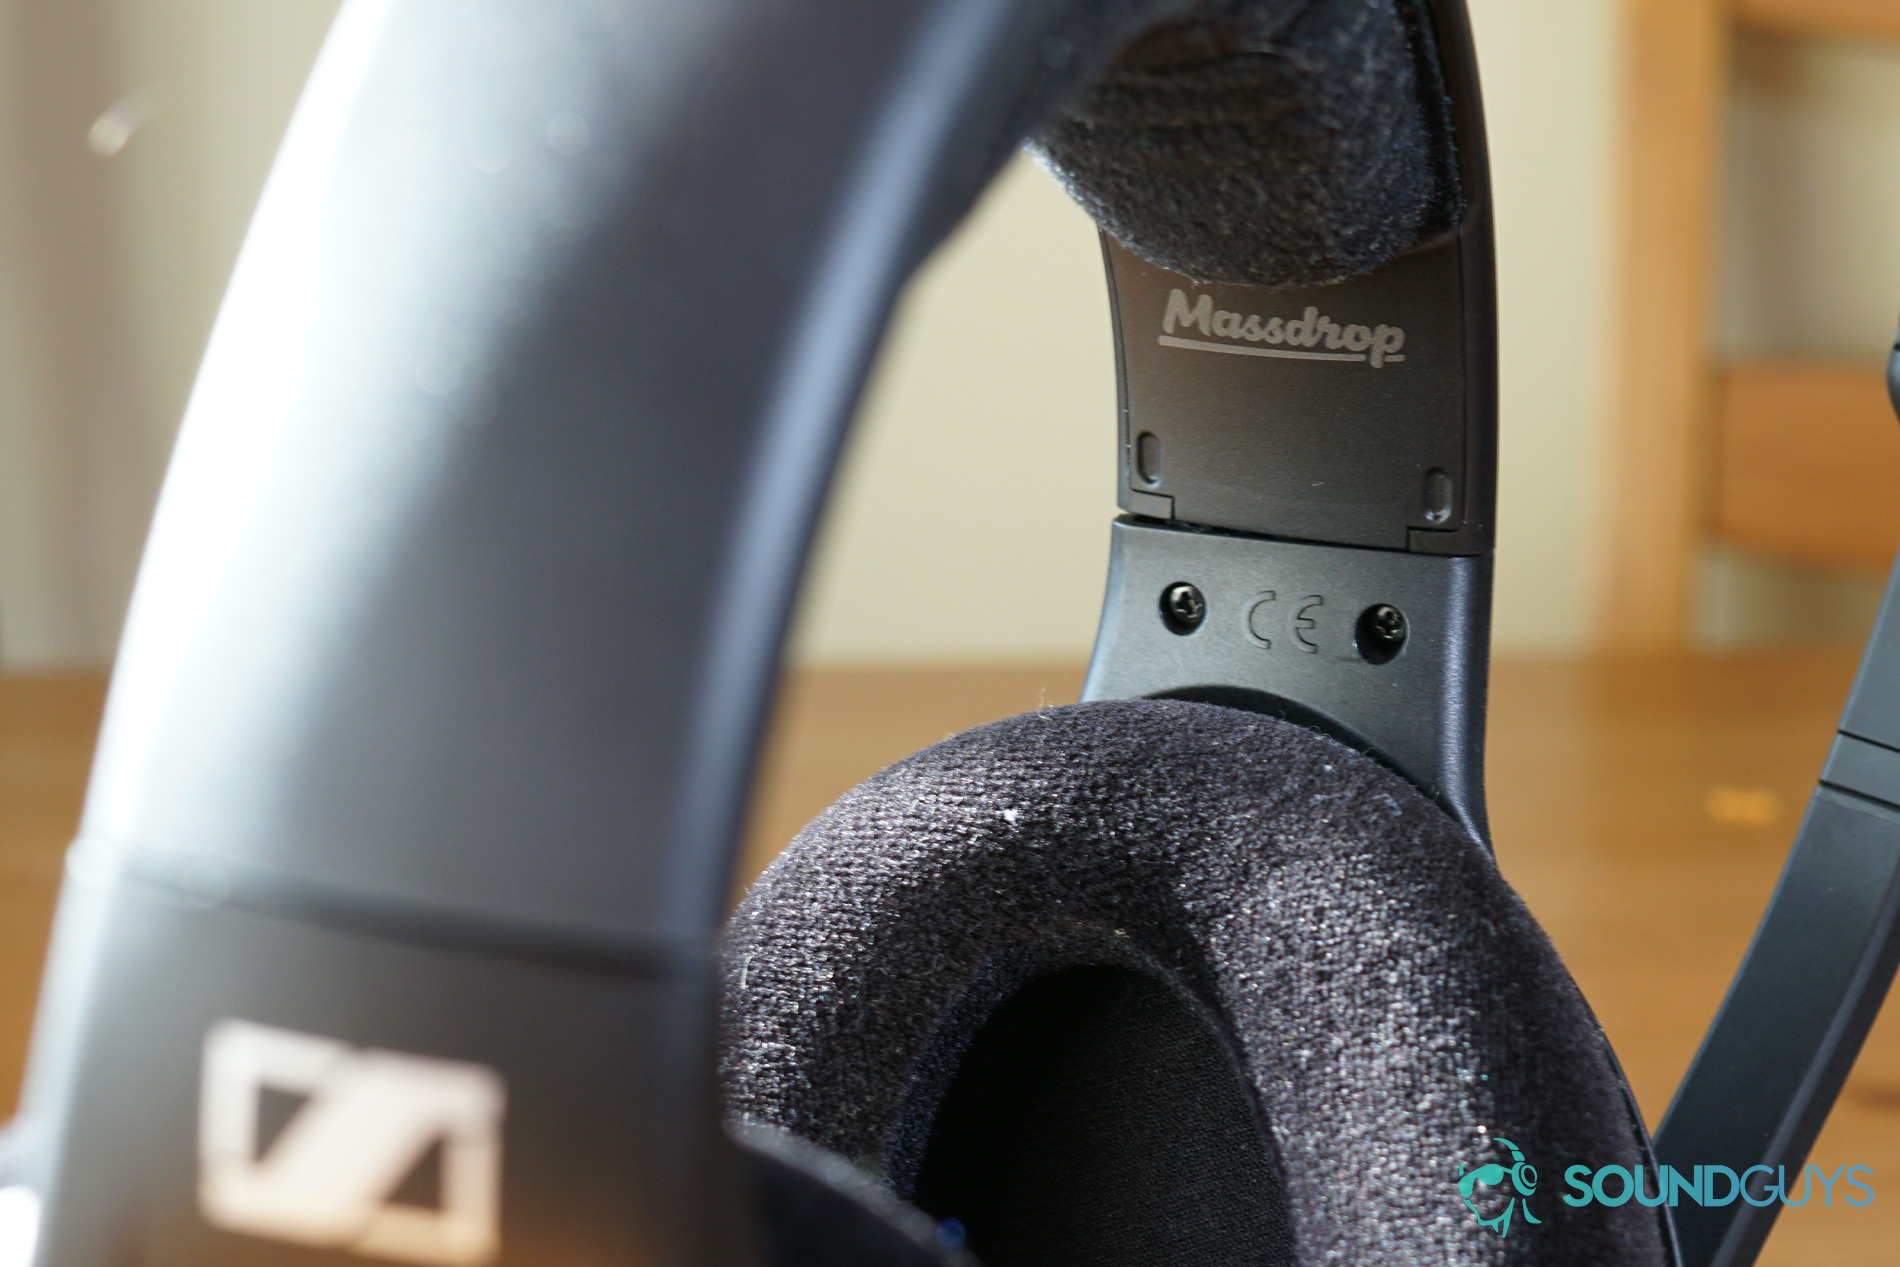 A close up shot of the Sennheiser PC37X gaming headset, highlighting both the Sennheiser and Massdrop logos.